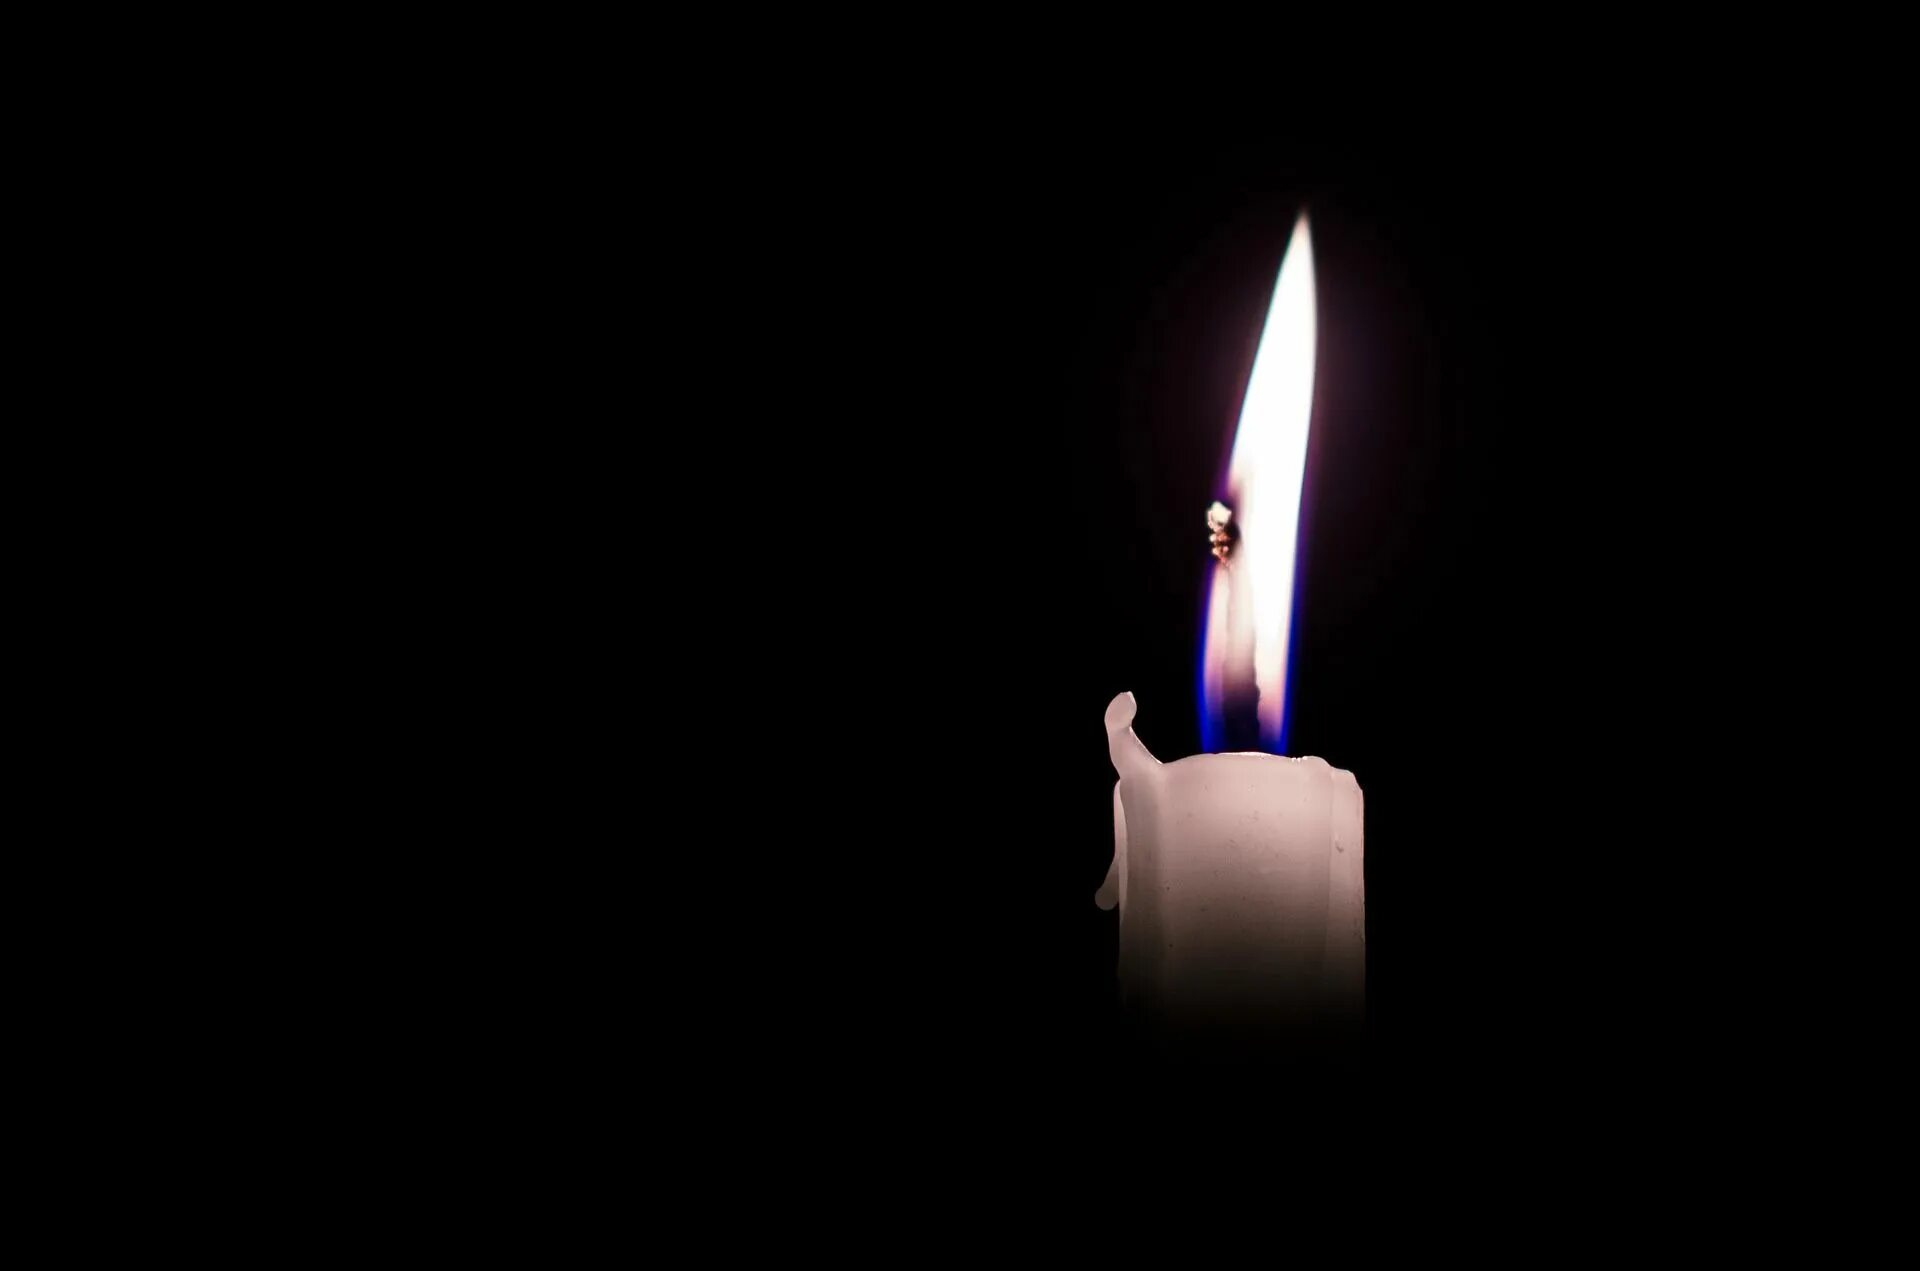 Видео горящей свечи на черном фоне. Свеча на темном фоне. Свеча на черном фоне. Свечка на черном фоне. Свеча в темноте.